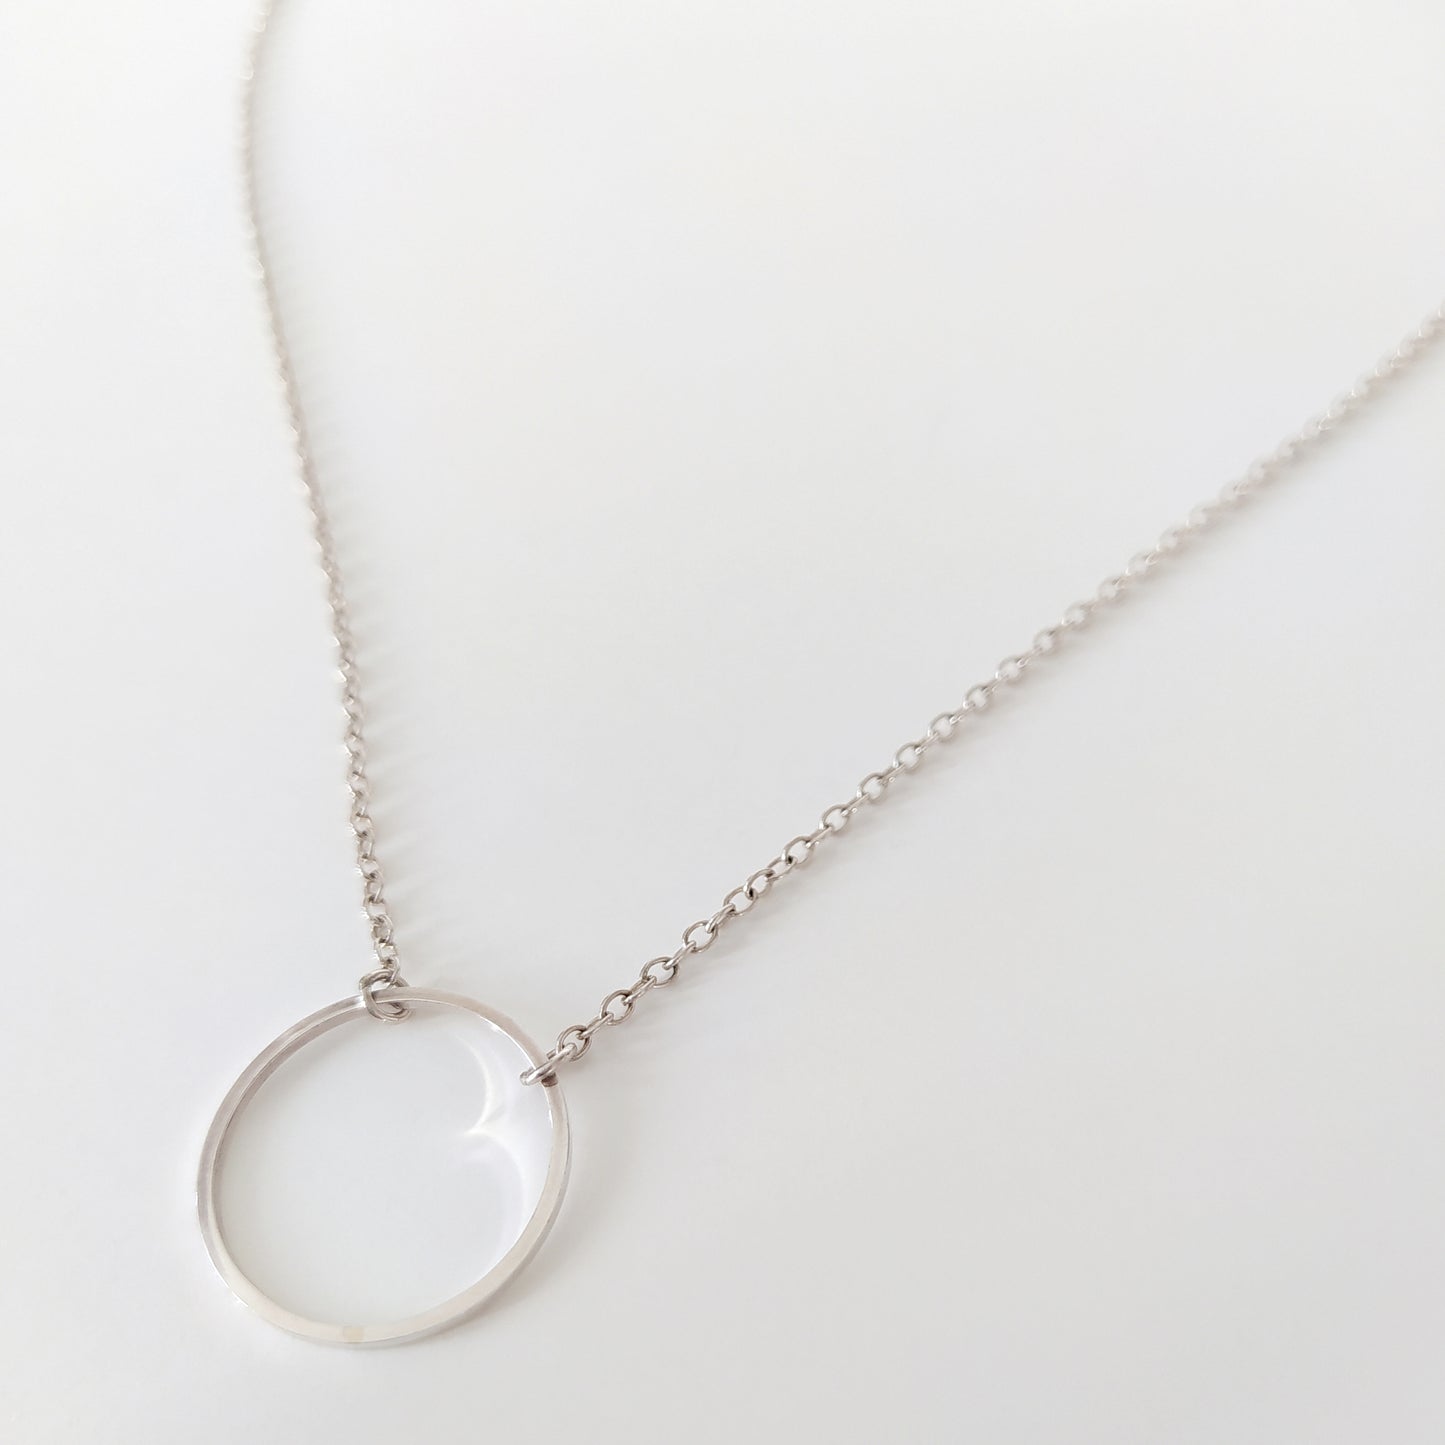 Runa | dainty silver chain with circle pendant